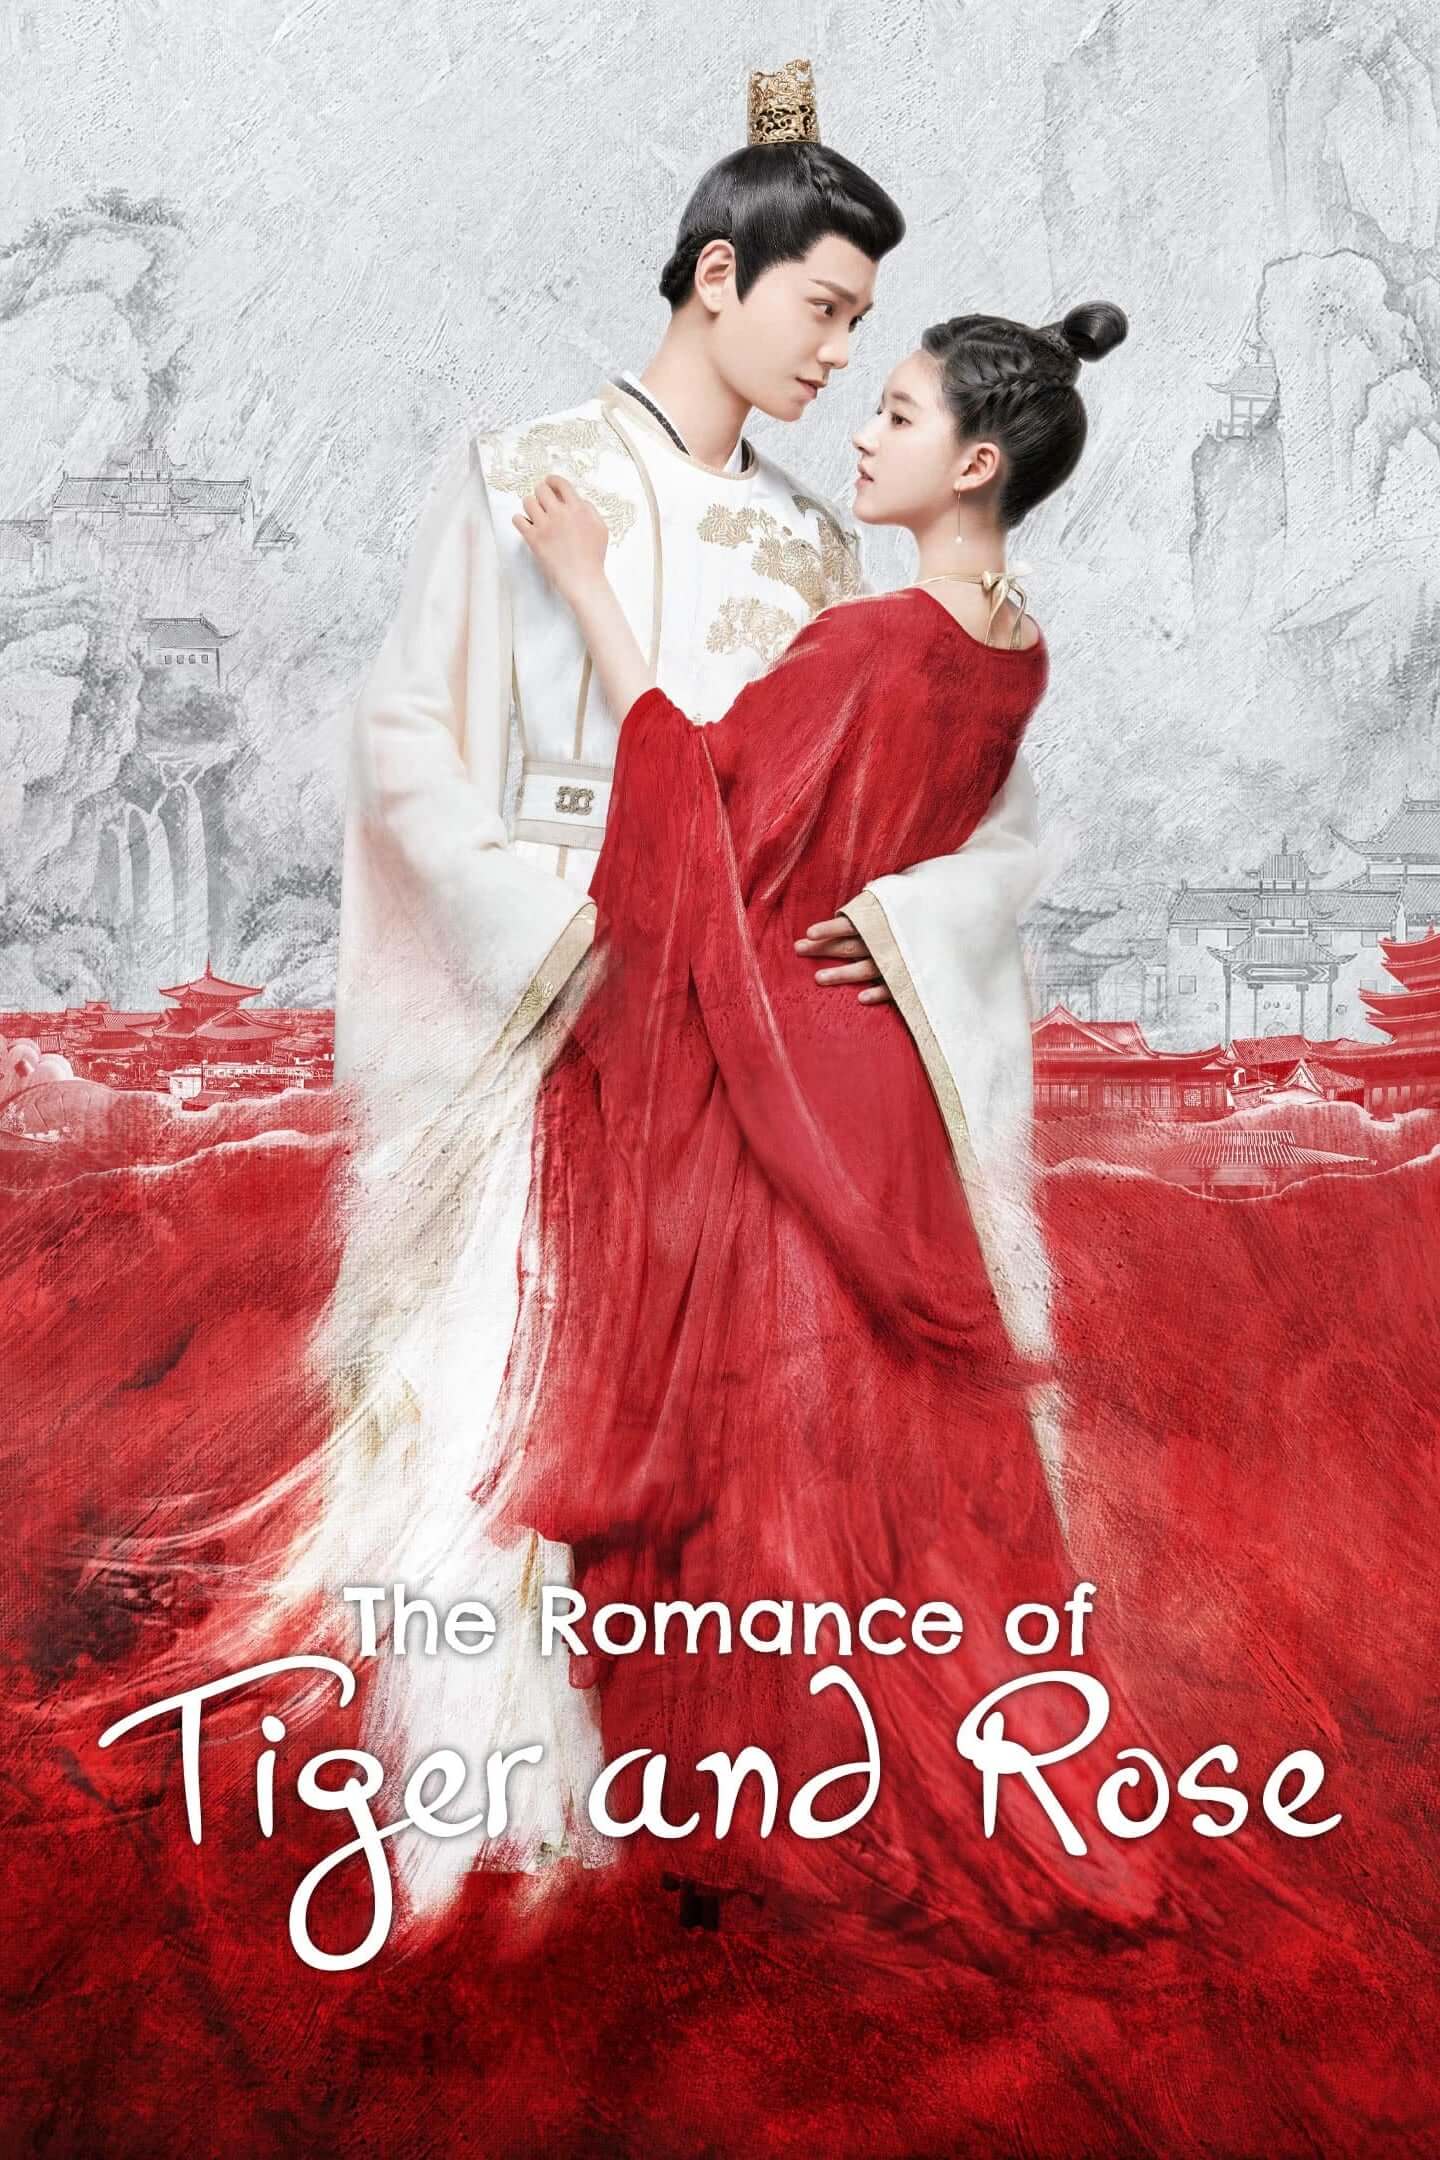 عاشقانه ببر و گل رز (The Romance of Tiger and Rose)